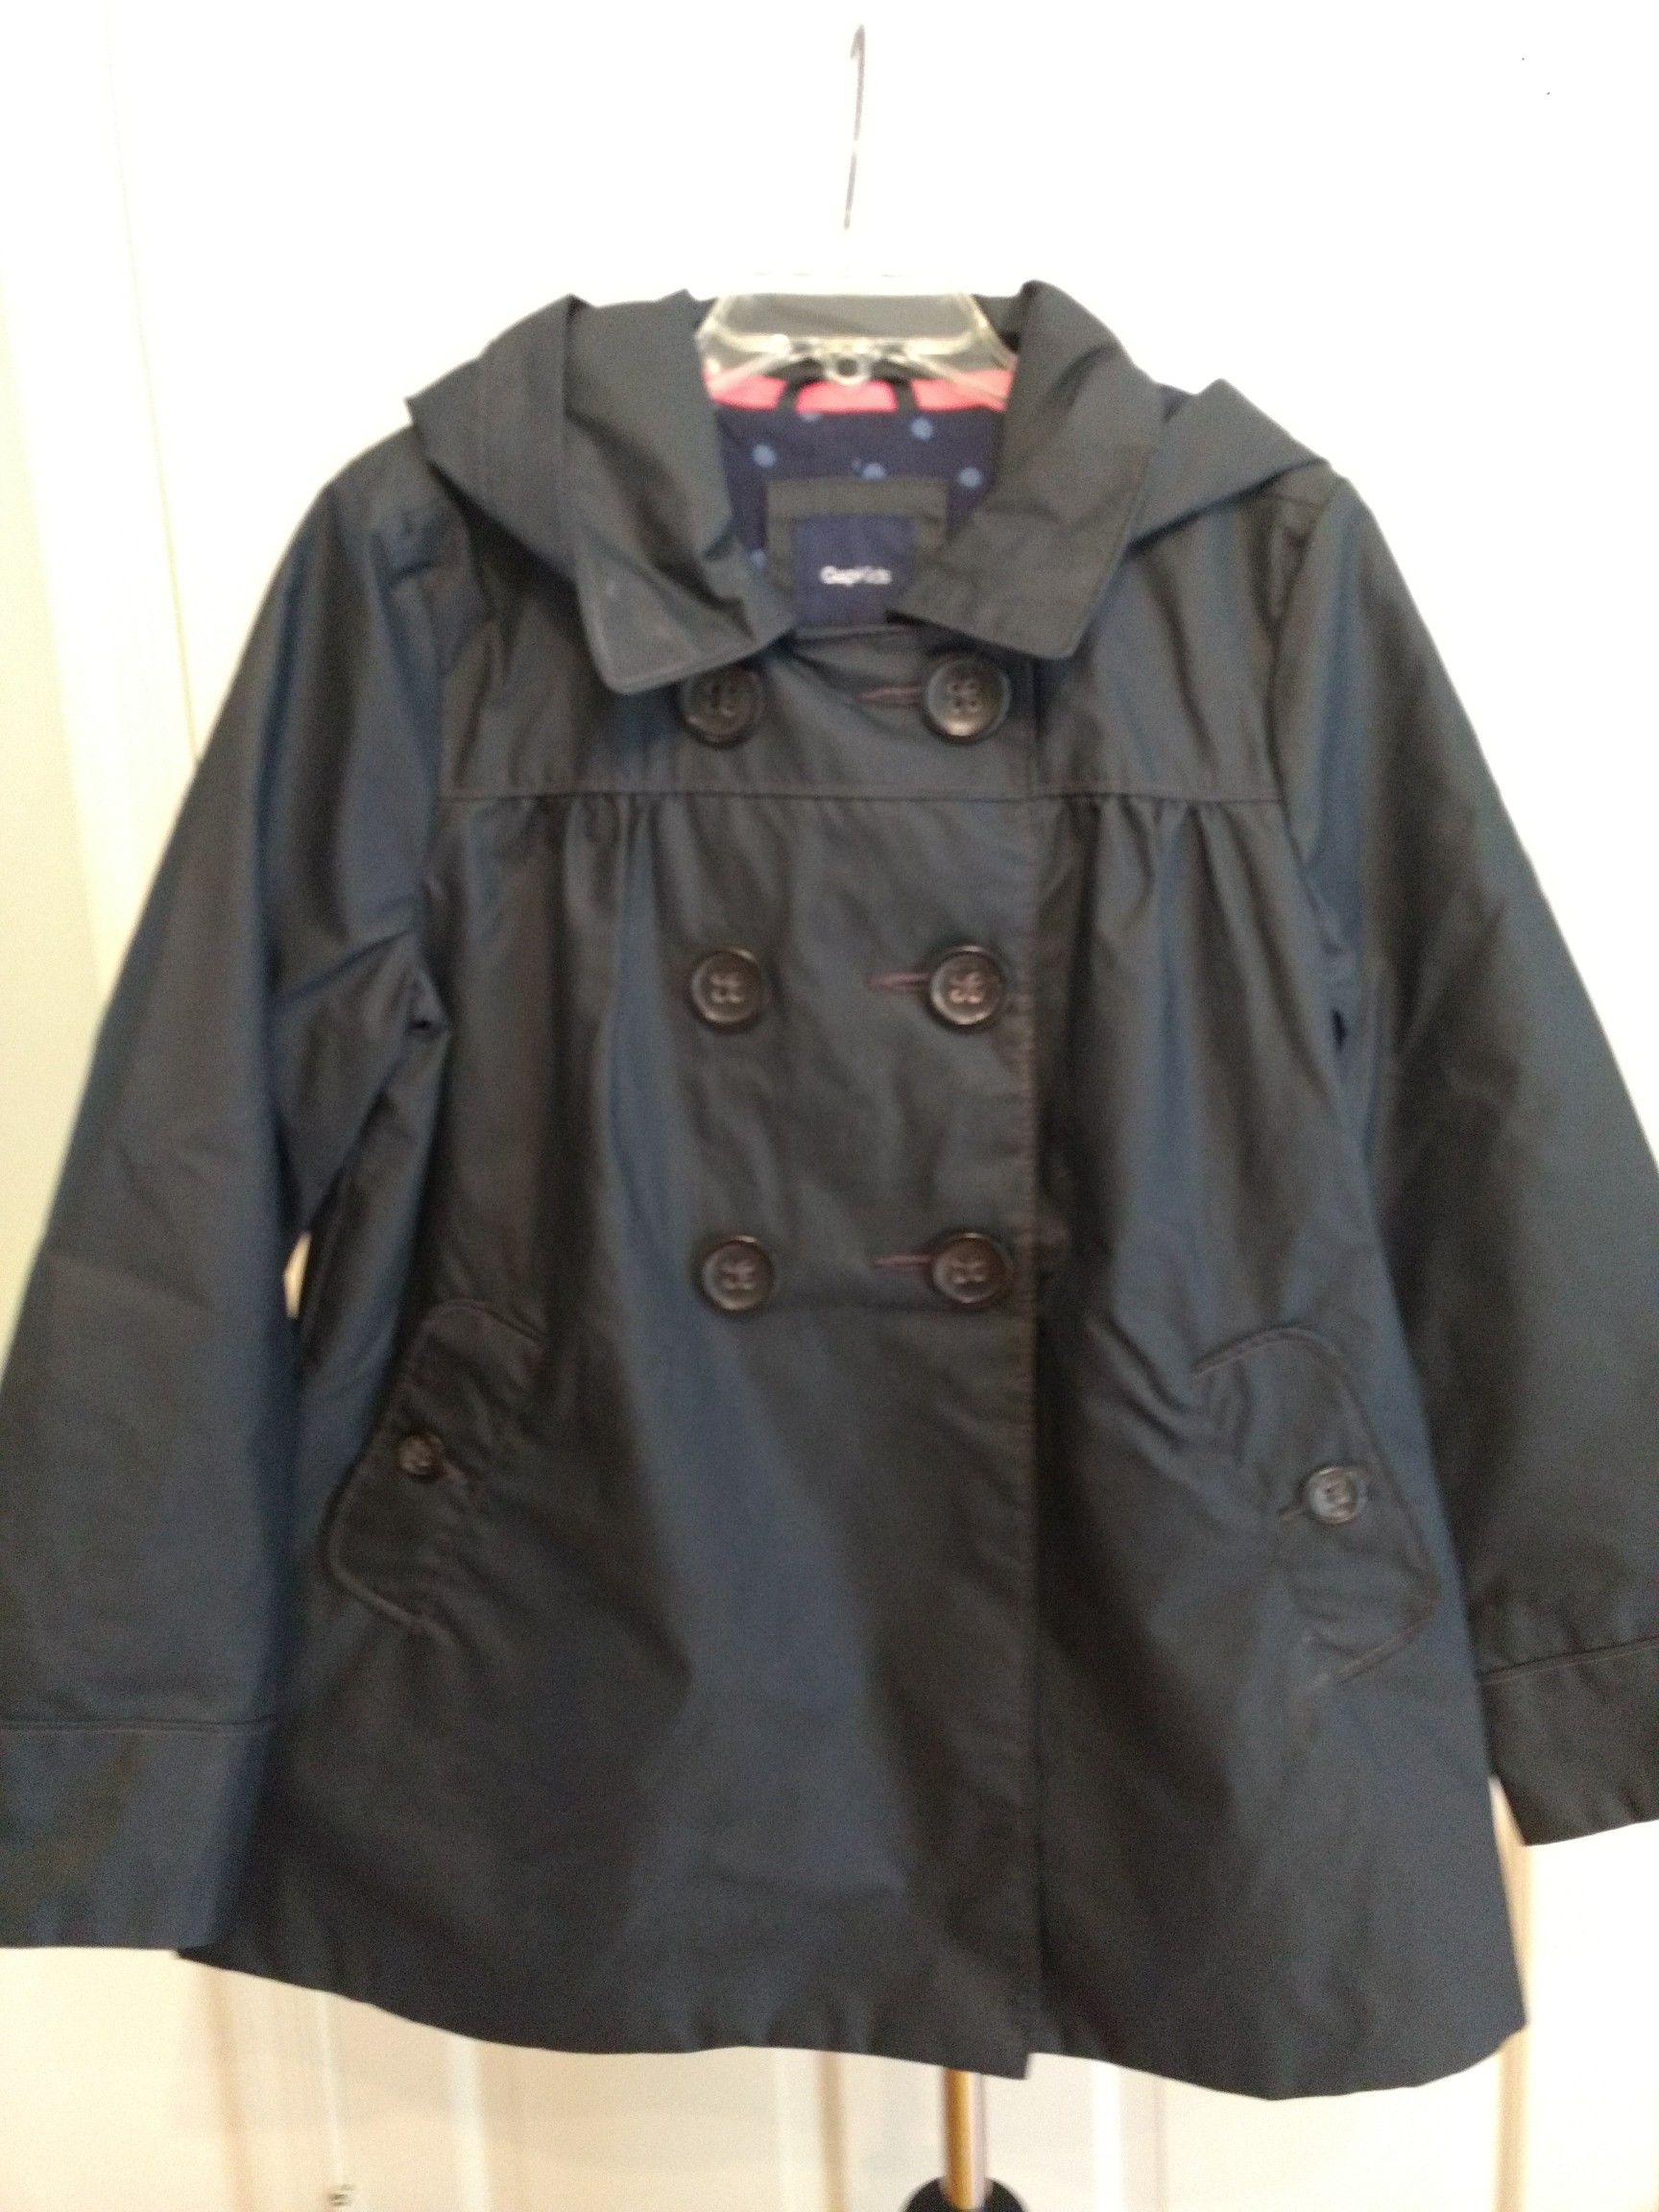 Raincoat, size 6-7, navy blue, by Gap Kids.